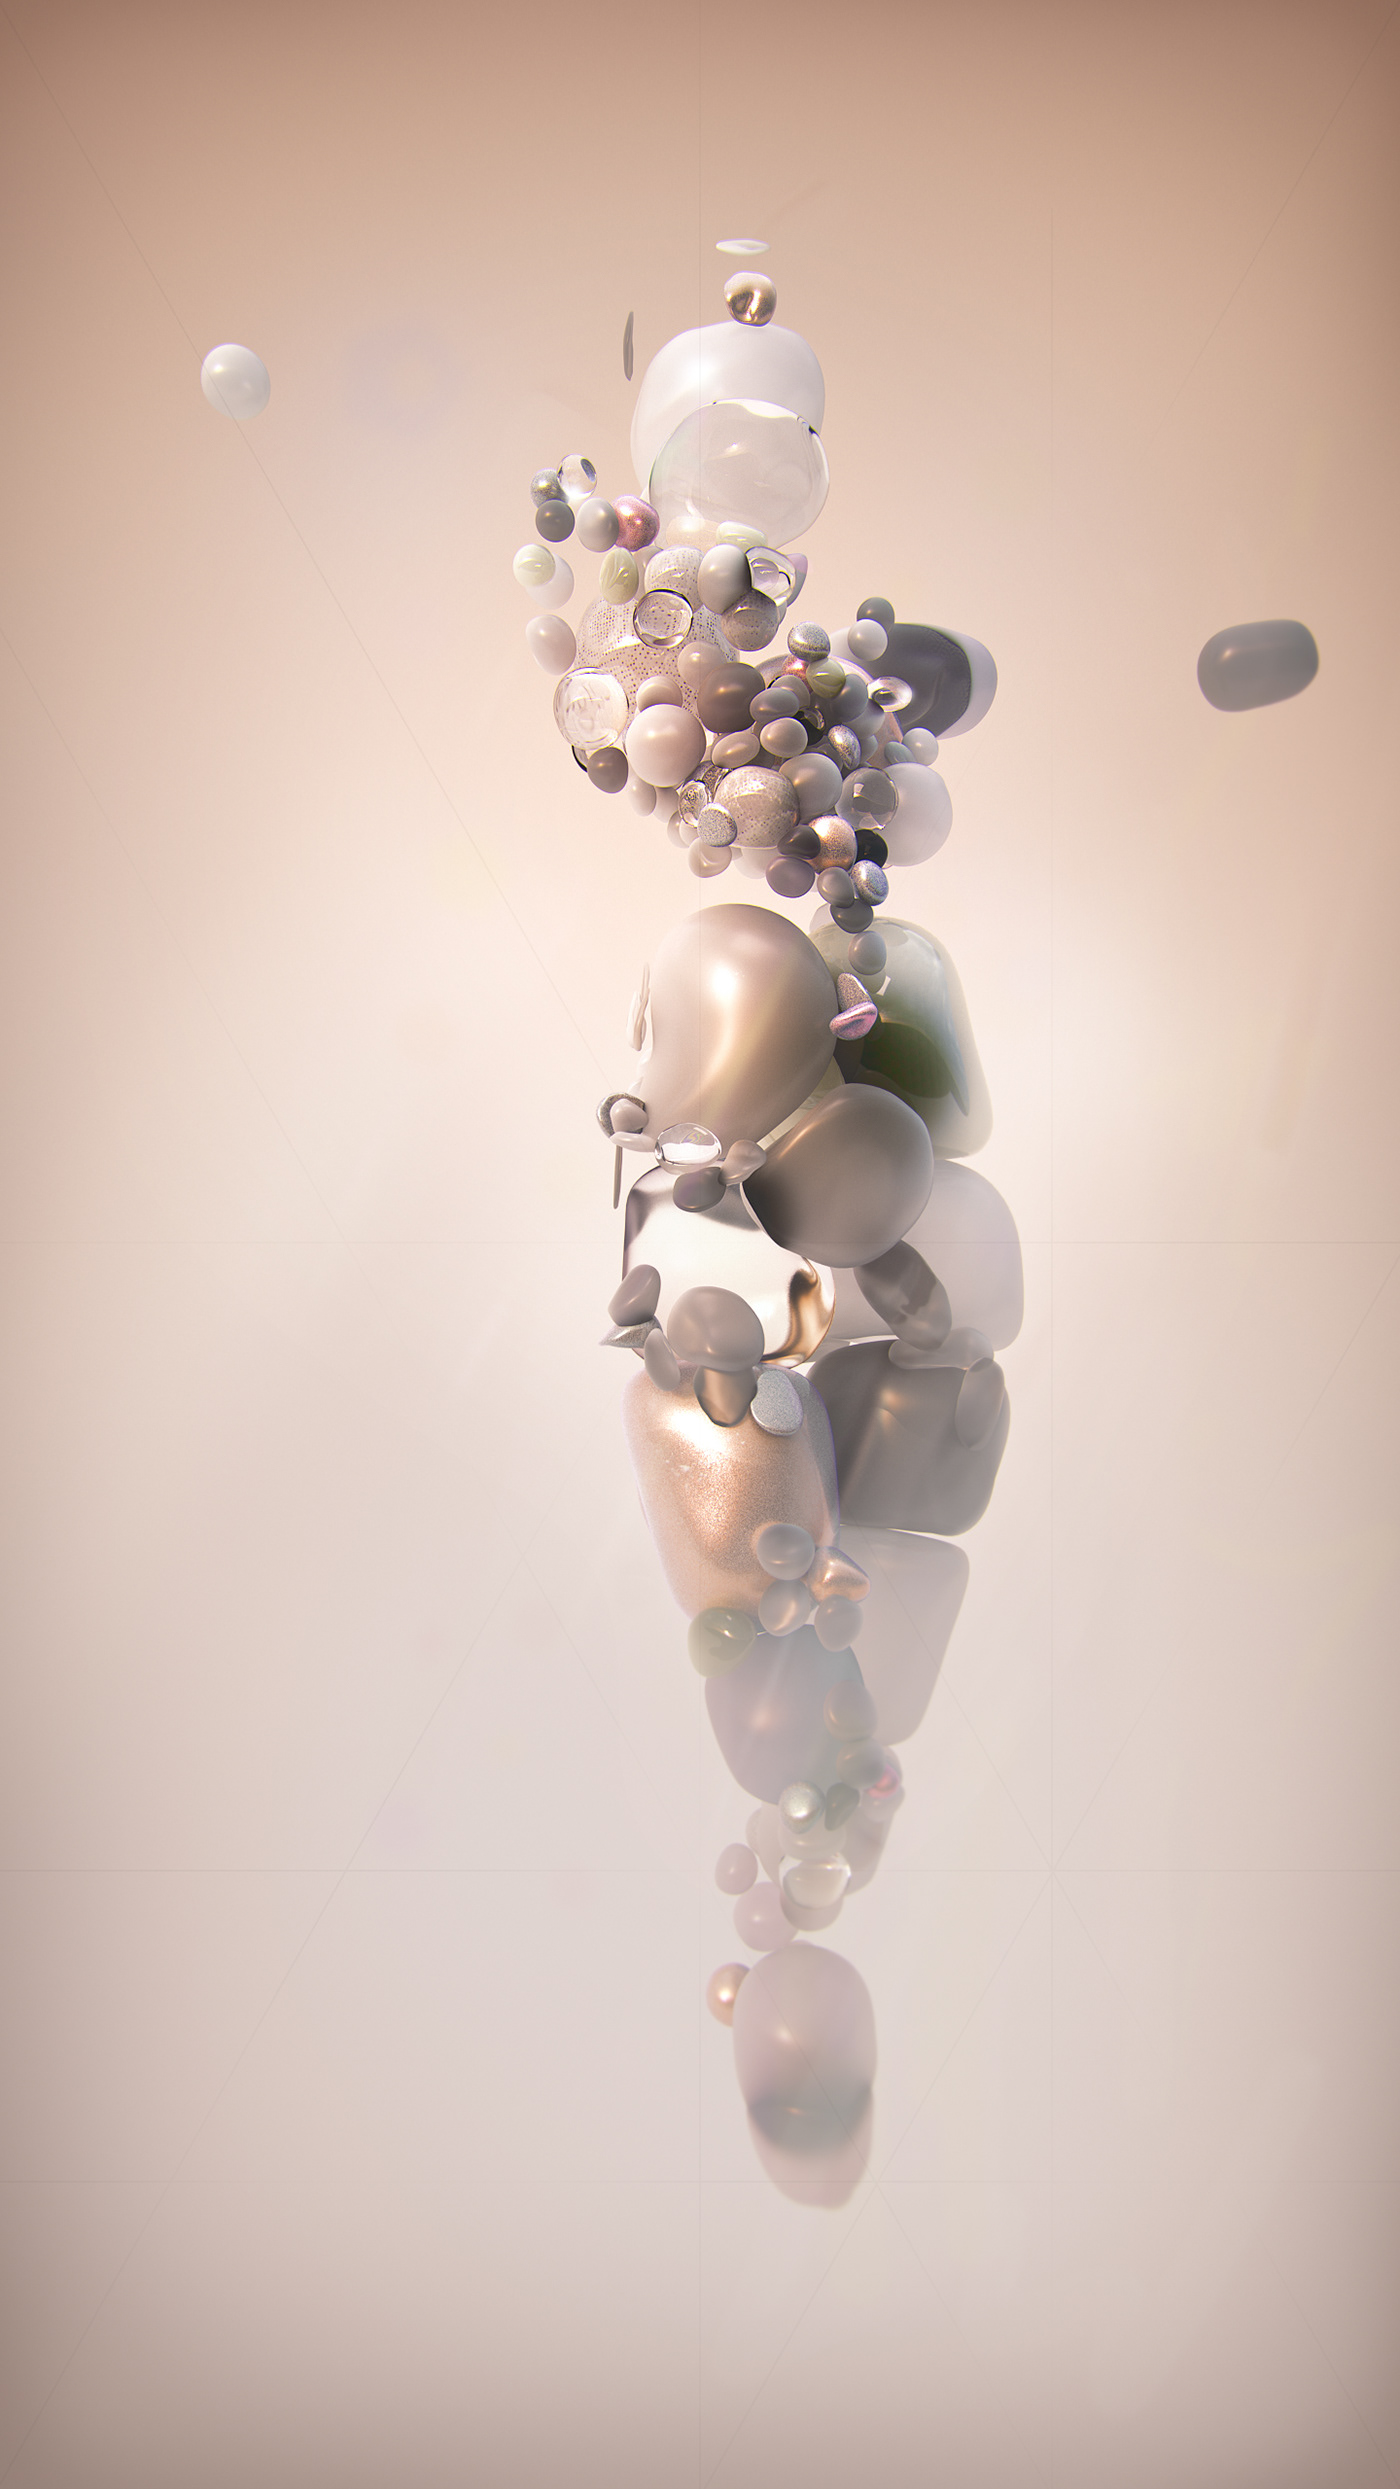 3D 3delight abstract Digital Art  houdini human vellum woman